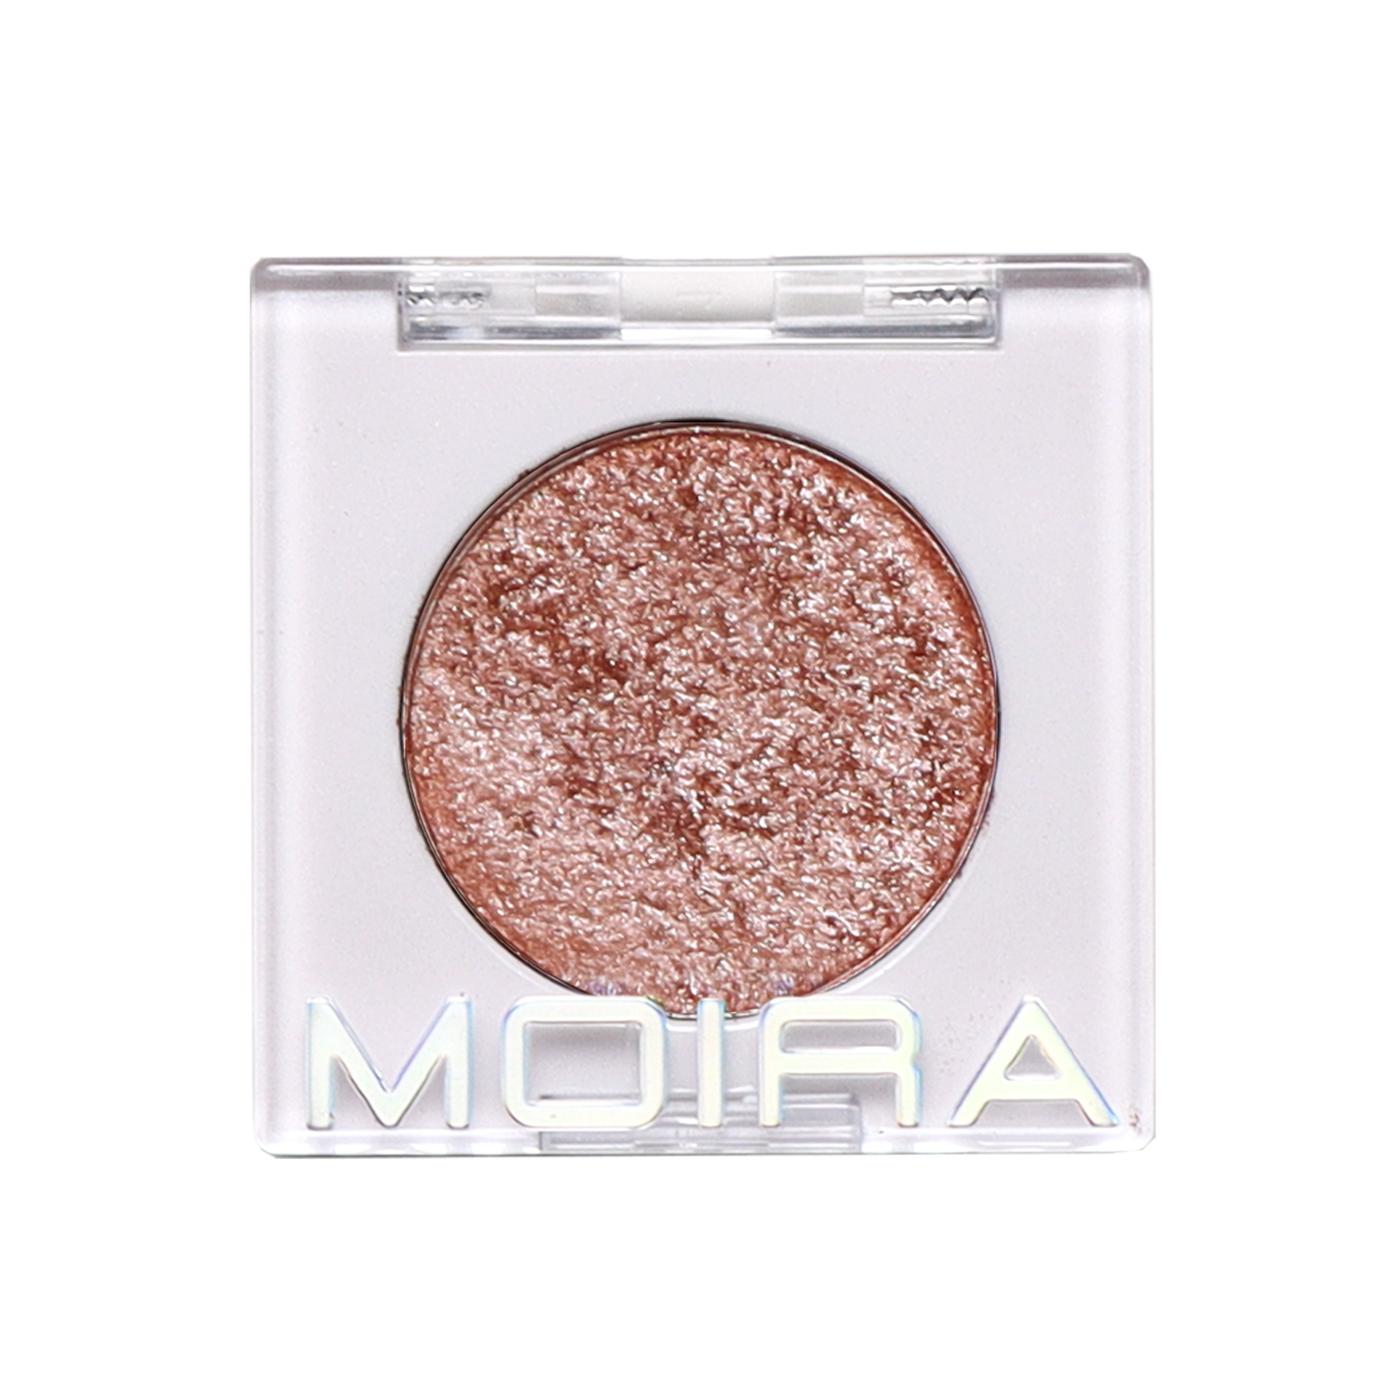 Moira  Chroma Light Shadow - Sugar Crush; image 1 of 2